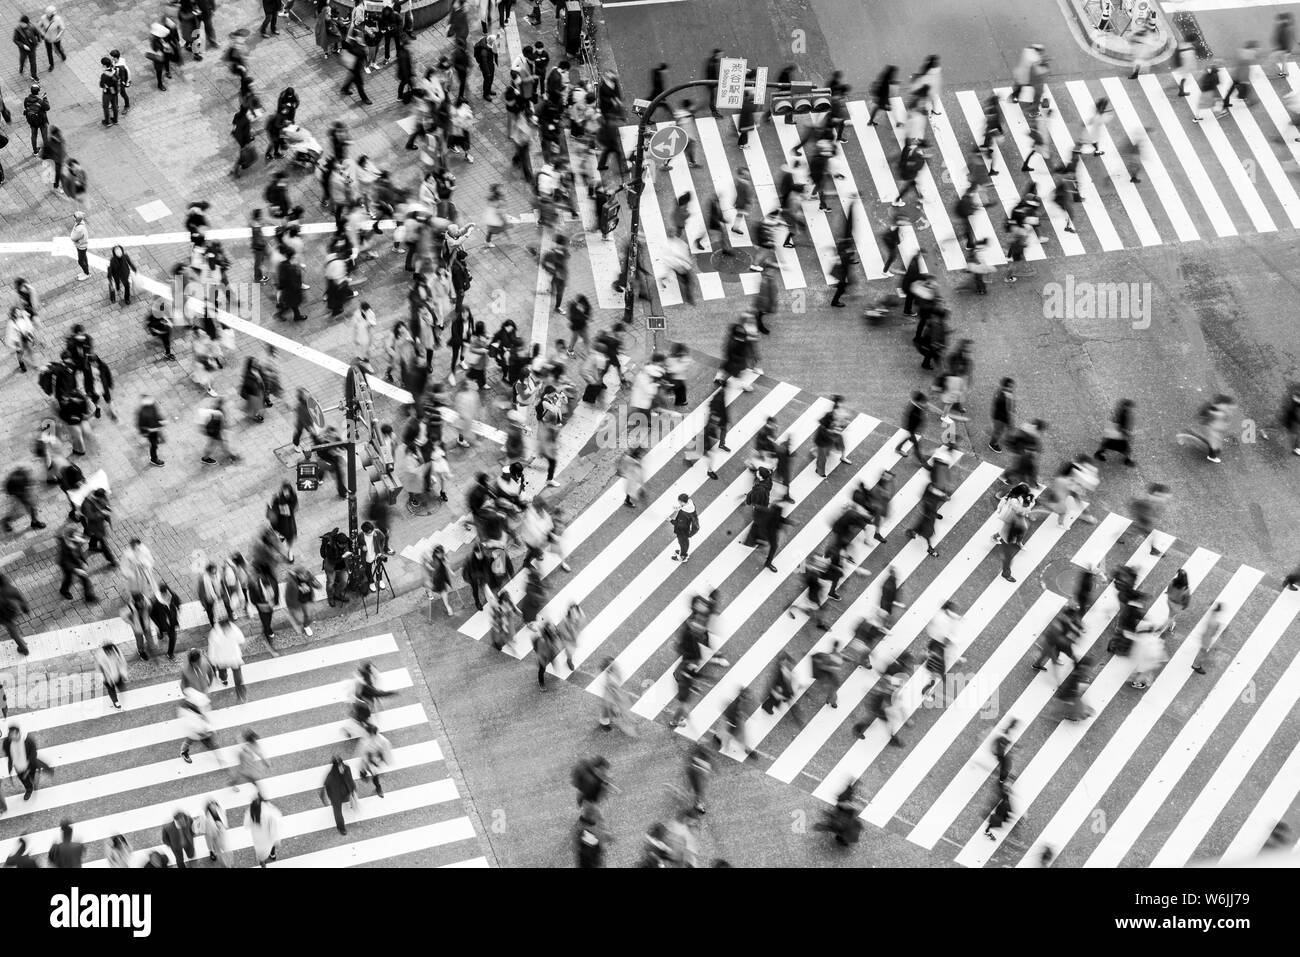 Shibuya crossing, crowds at intersection, many people cross zebra crossing, blurred, motion, black and white, Shibuya, Udagawacho, Tokyo, Japan Stock Photo